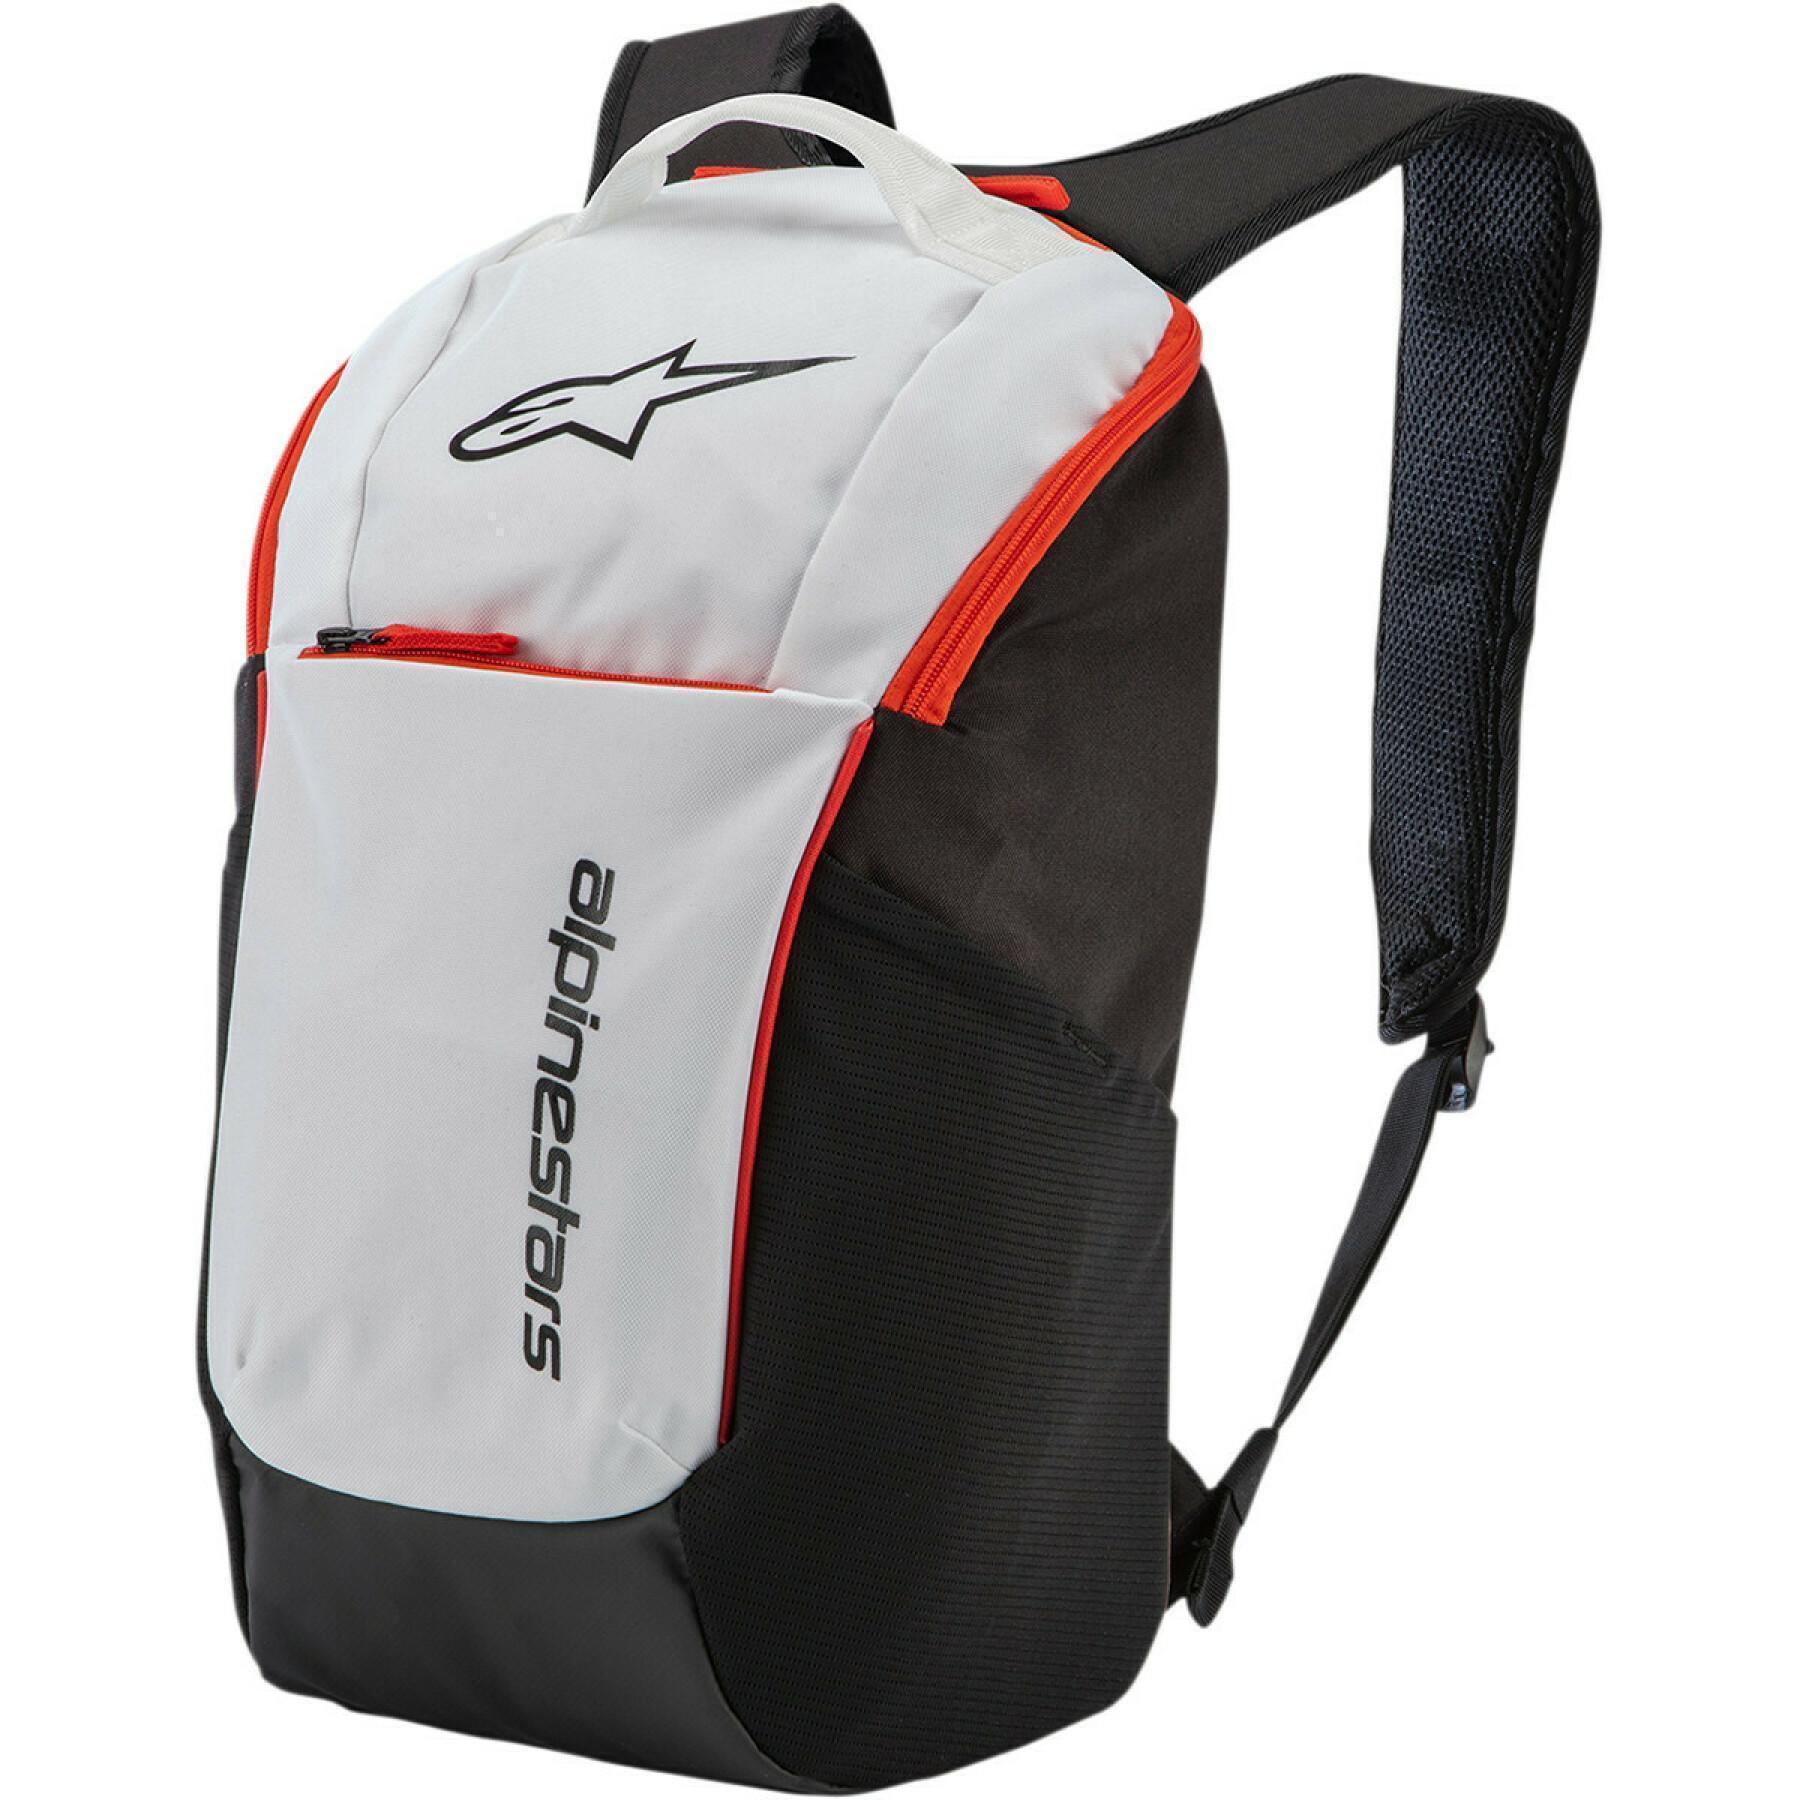 Backpack Alpinestars defconv2